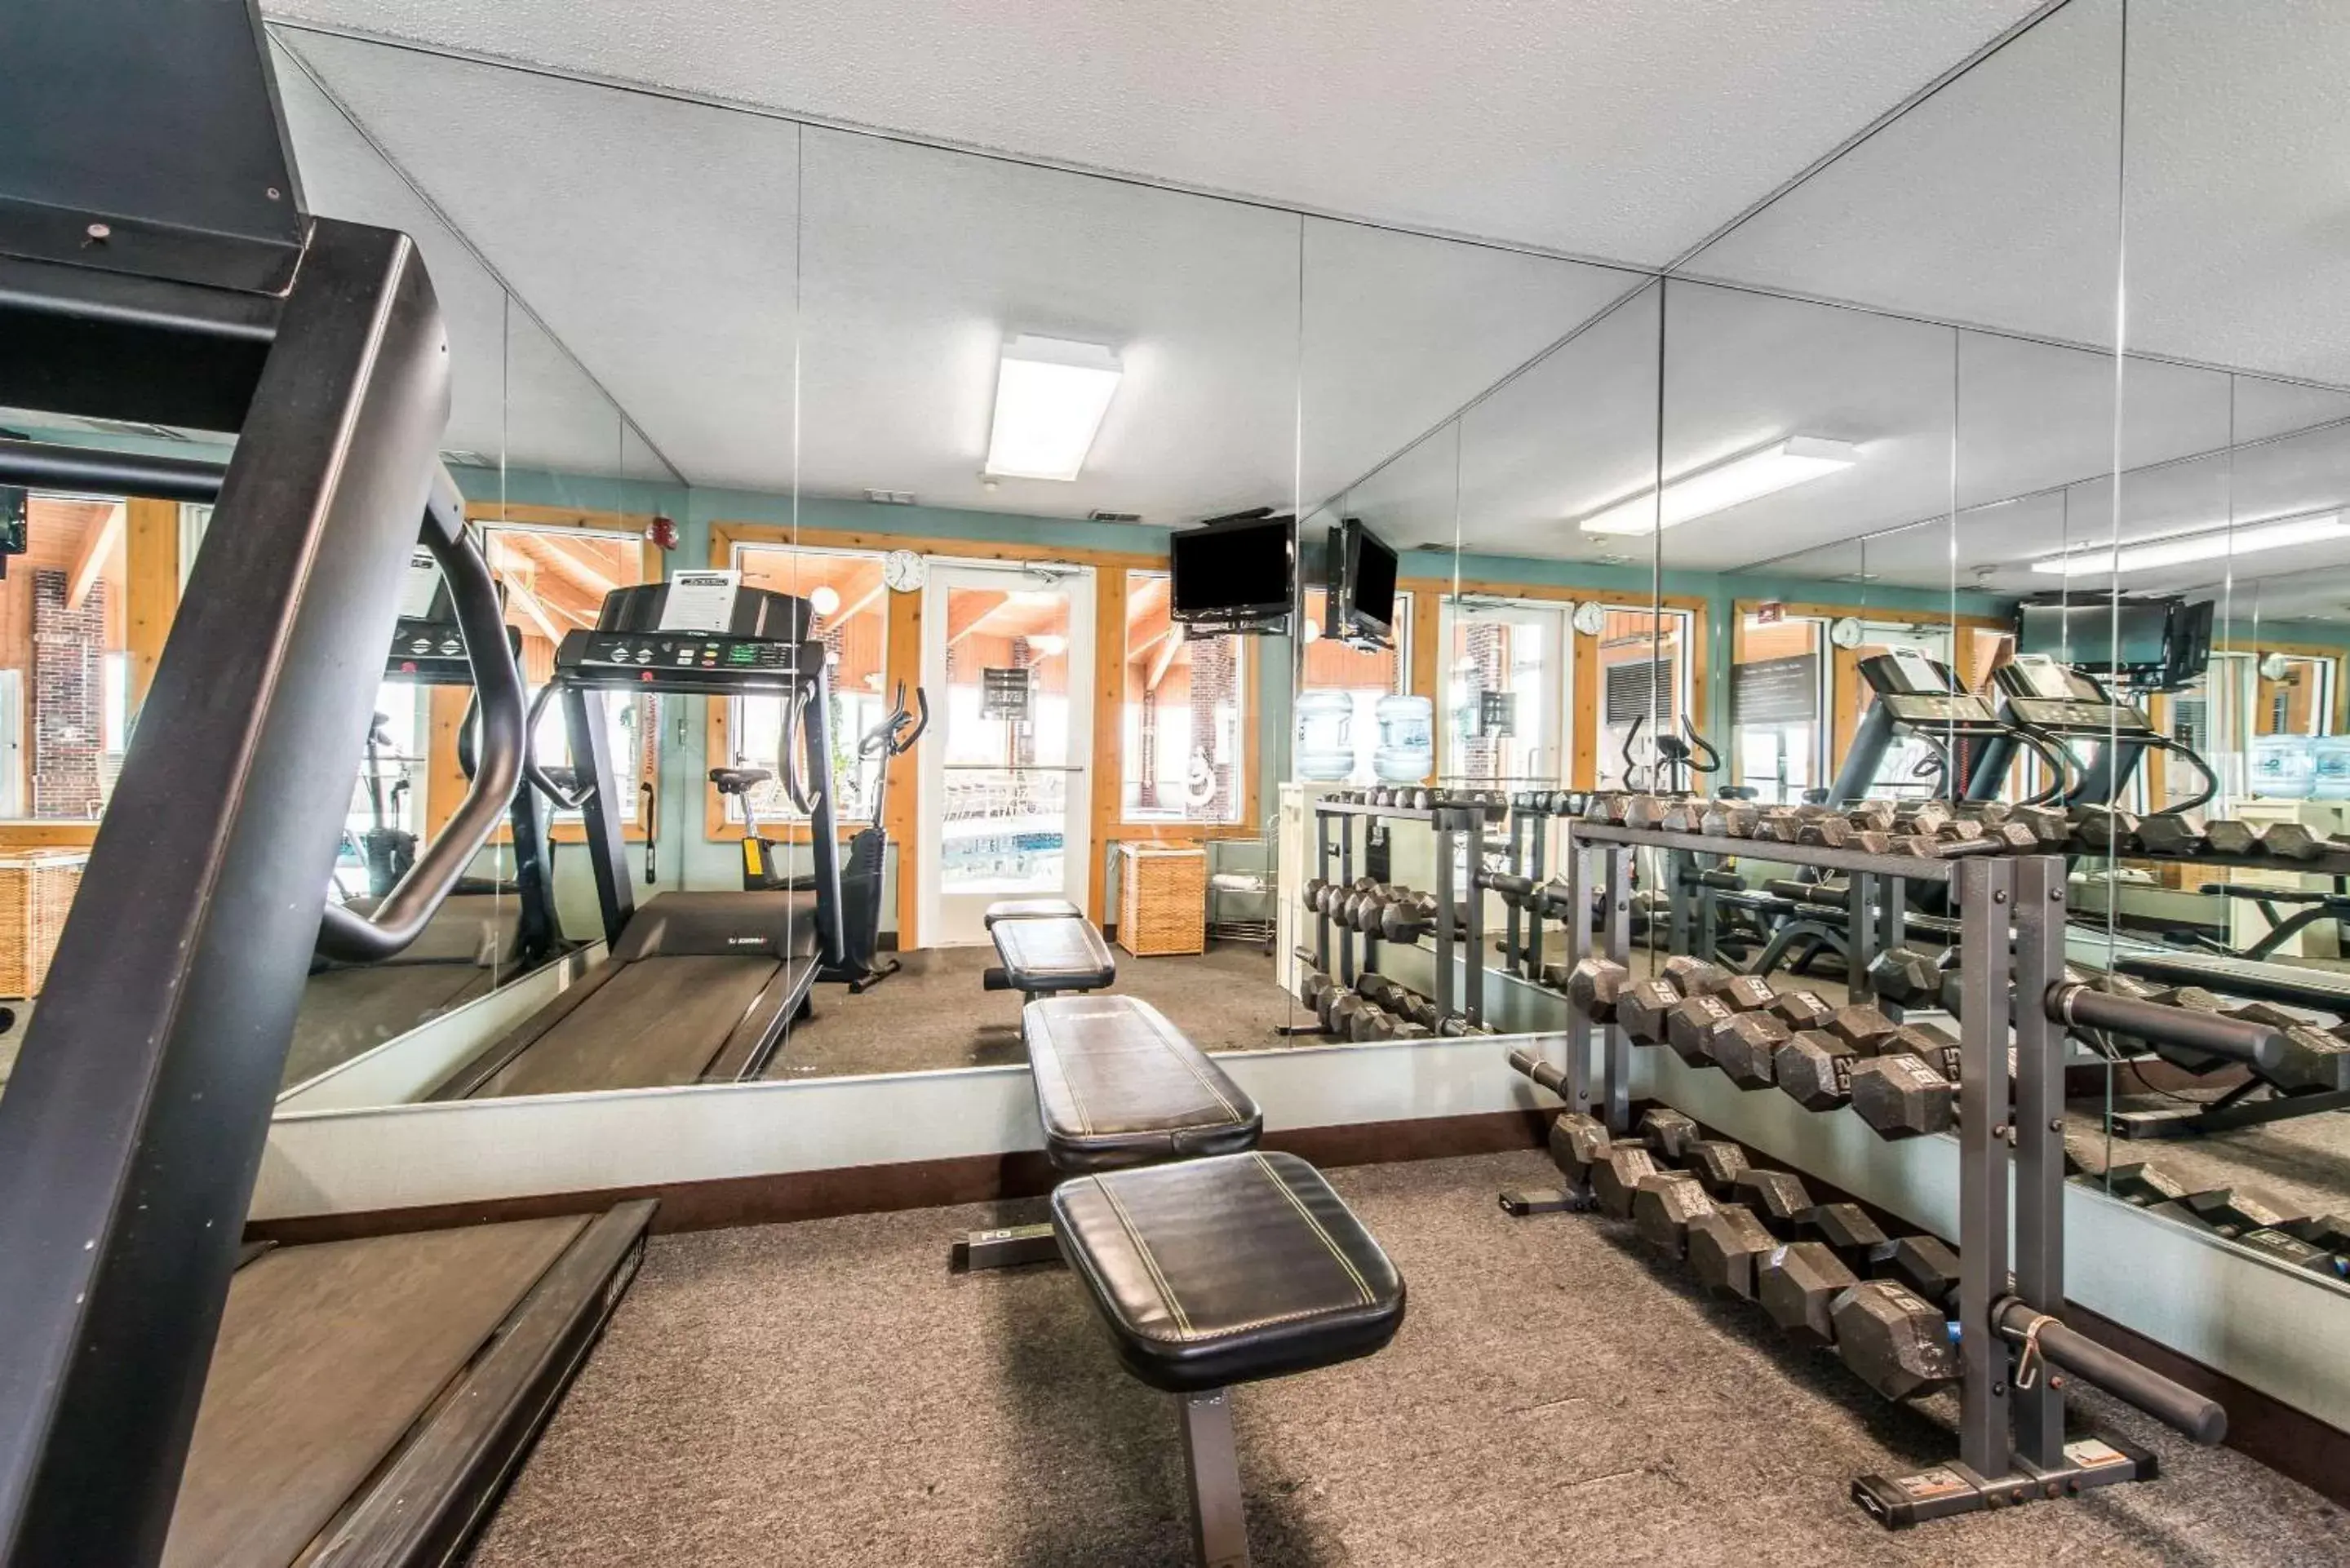 Fitness centre/facilities, Fitness Center/Facilities in Comfort Inn Weirton